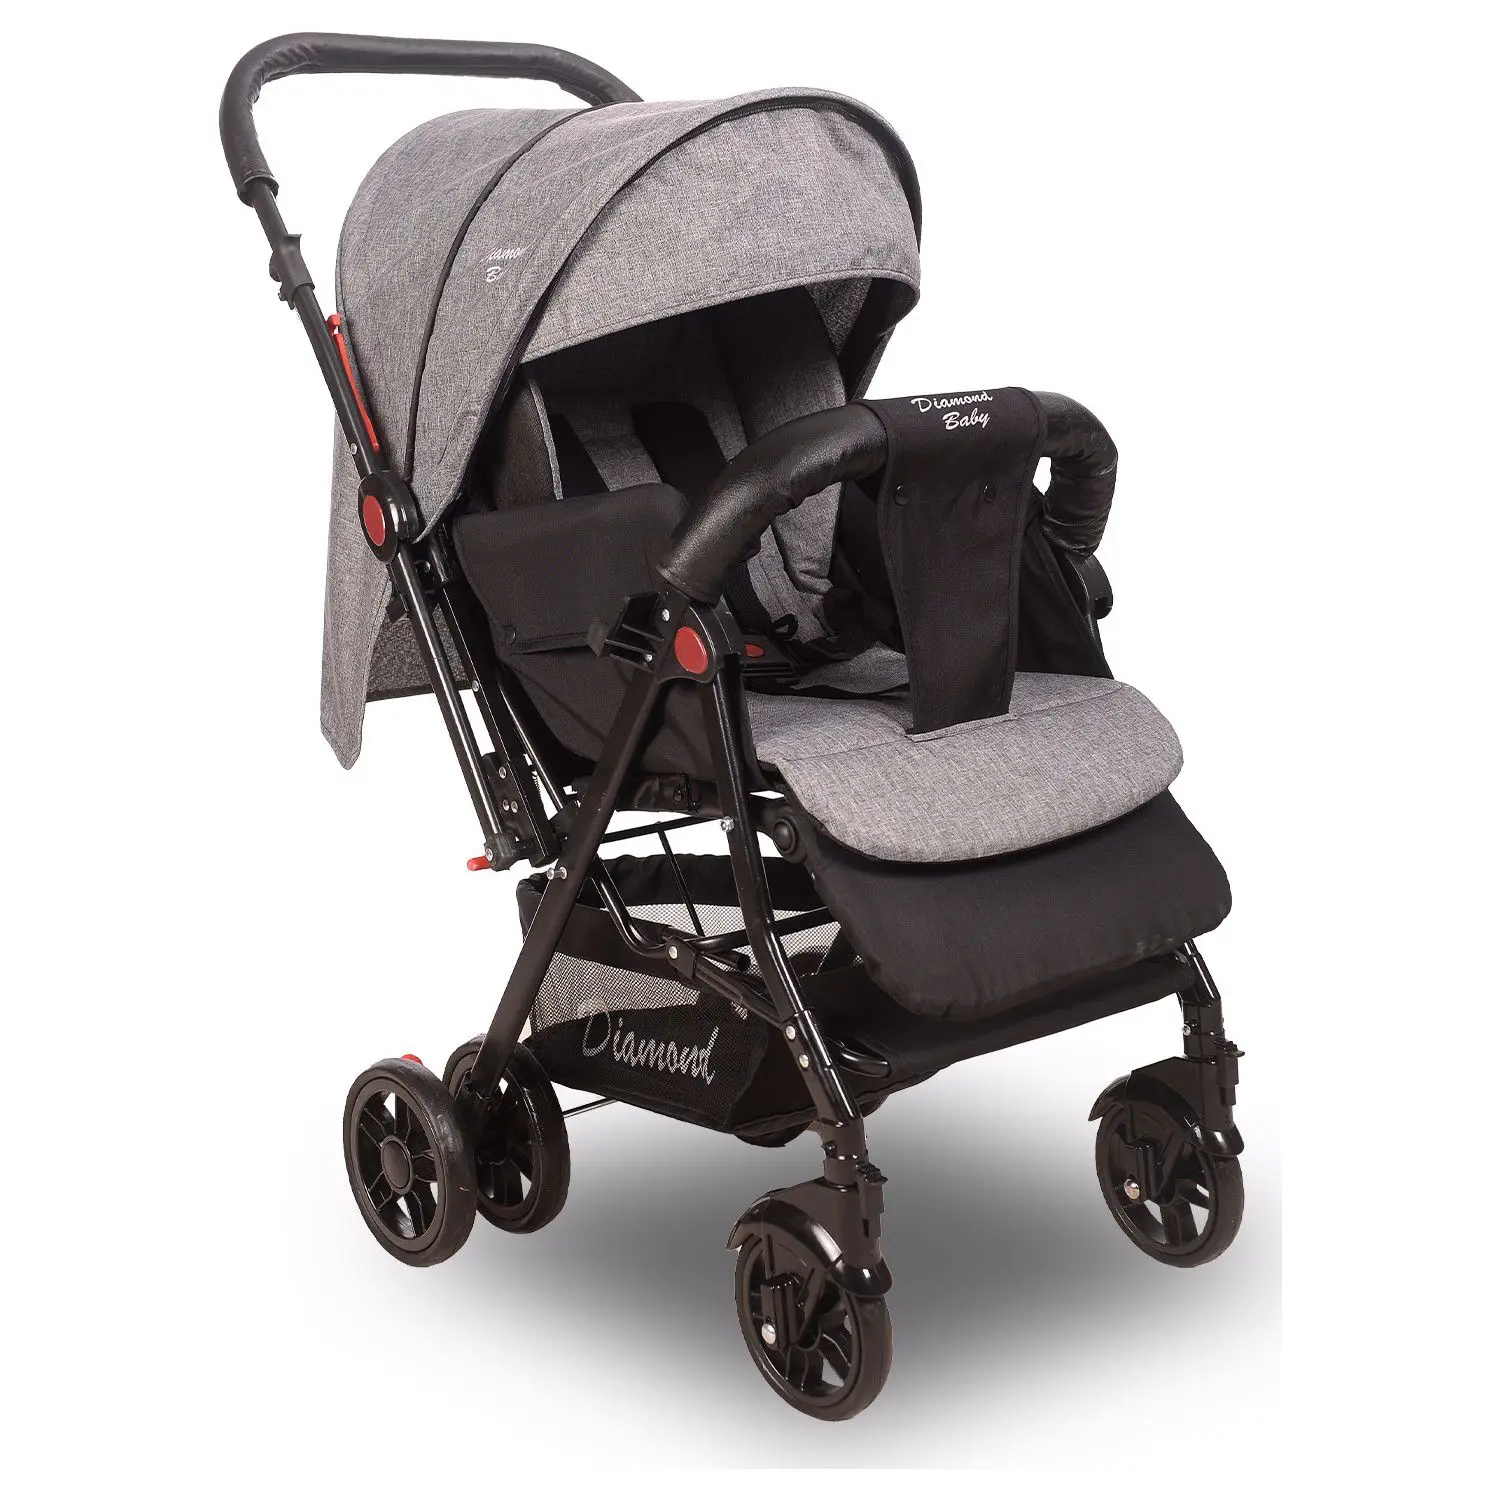 Sapphire Duplex Baby Stroller Newborn stroller 3 in 1 folding prams portable travel baby stroller